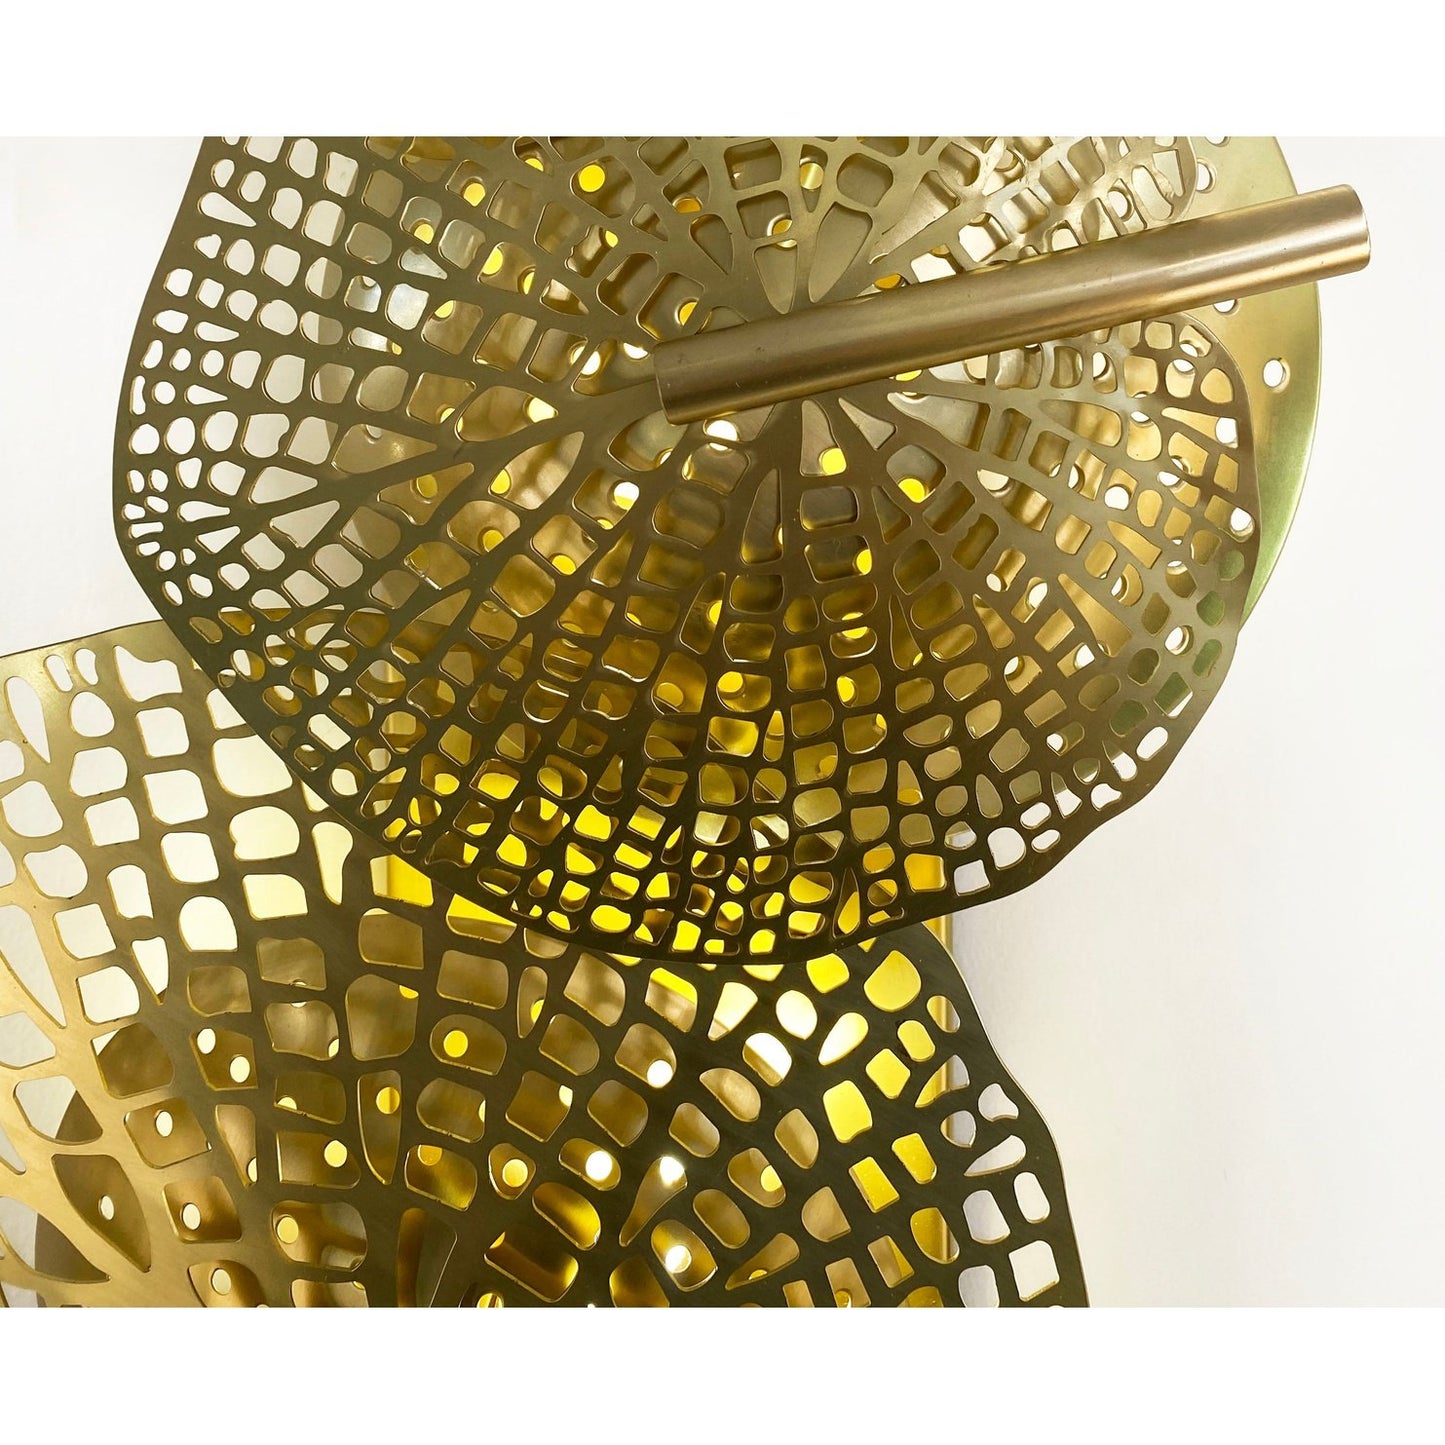 Contemporary Bespoke Organic Italian Art Design Perforated Brass Leaf Sconce